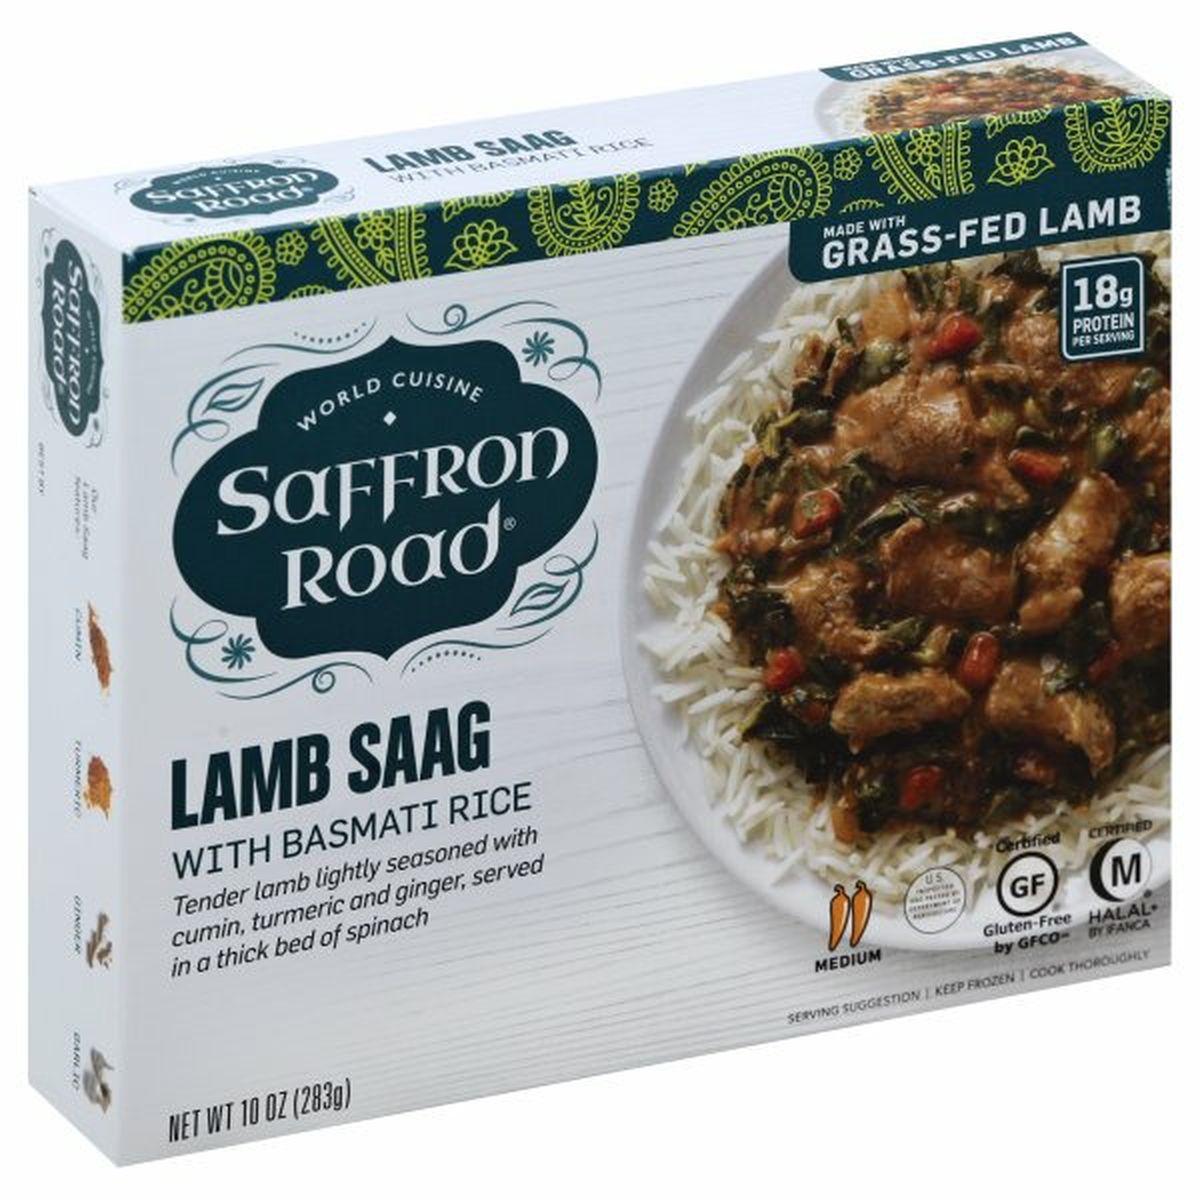 Calories in Saffron Road Lamb Saag, with Basmati Rice, Medium